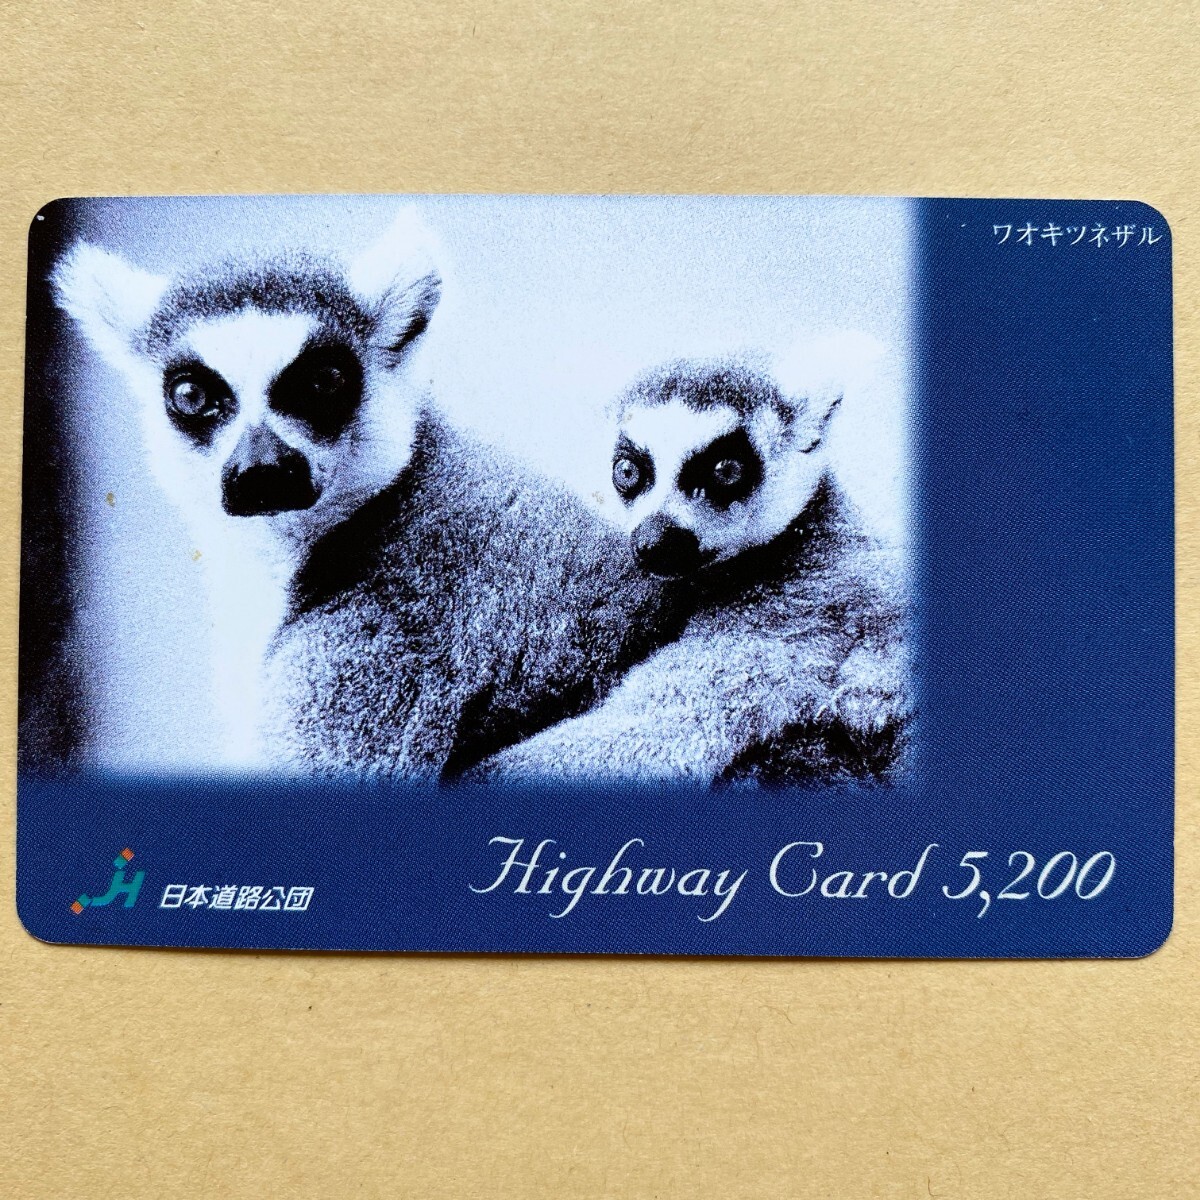 [ used ] highway card Japan road ..wao fox The ru